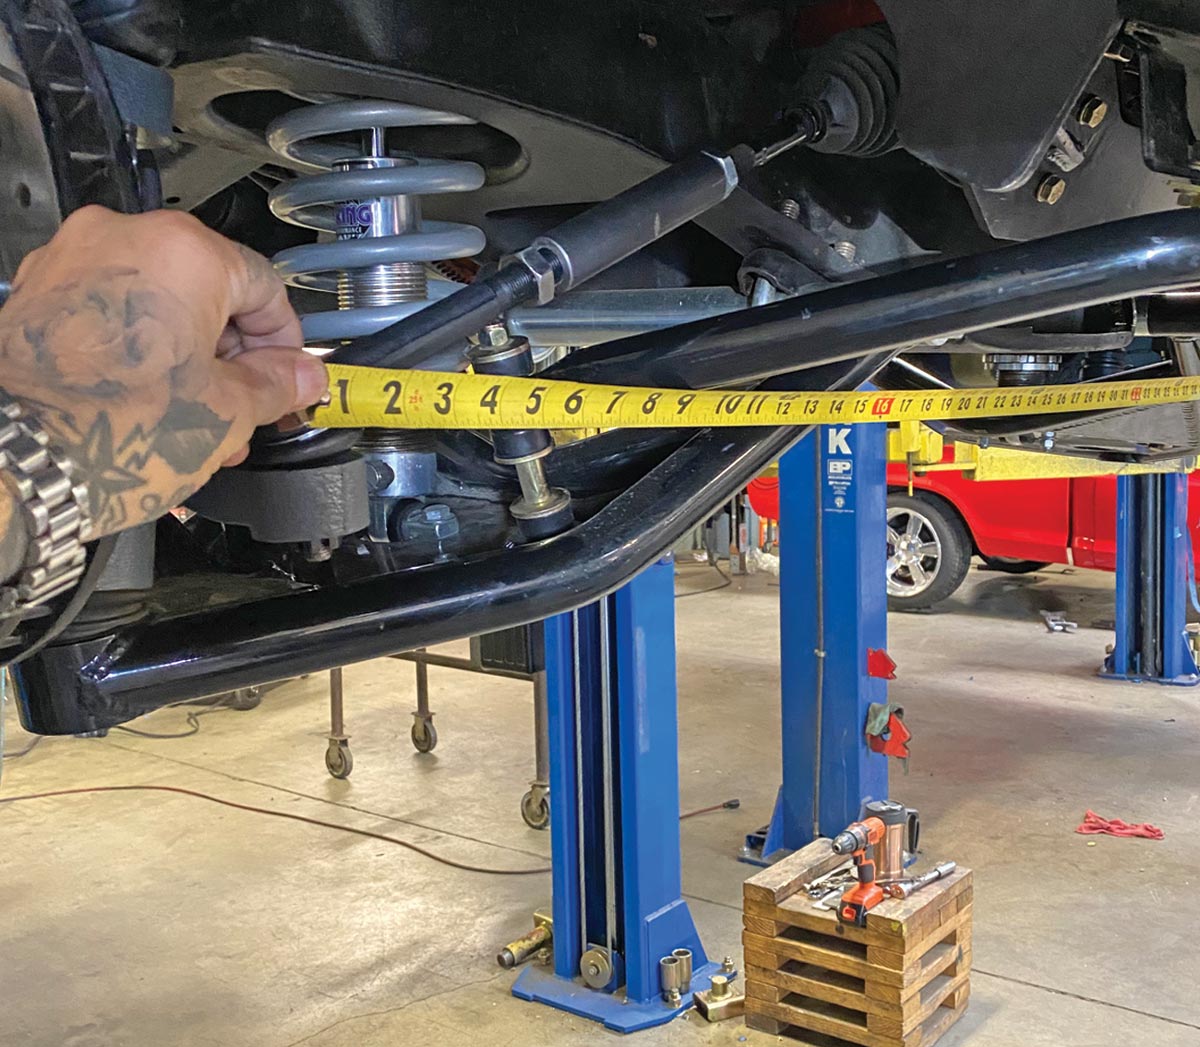 mechanic takes measurement beneath the truck